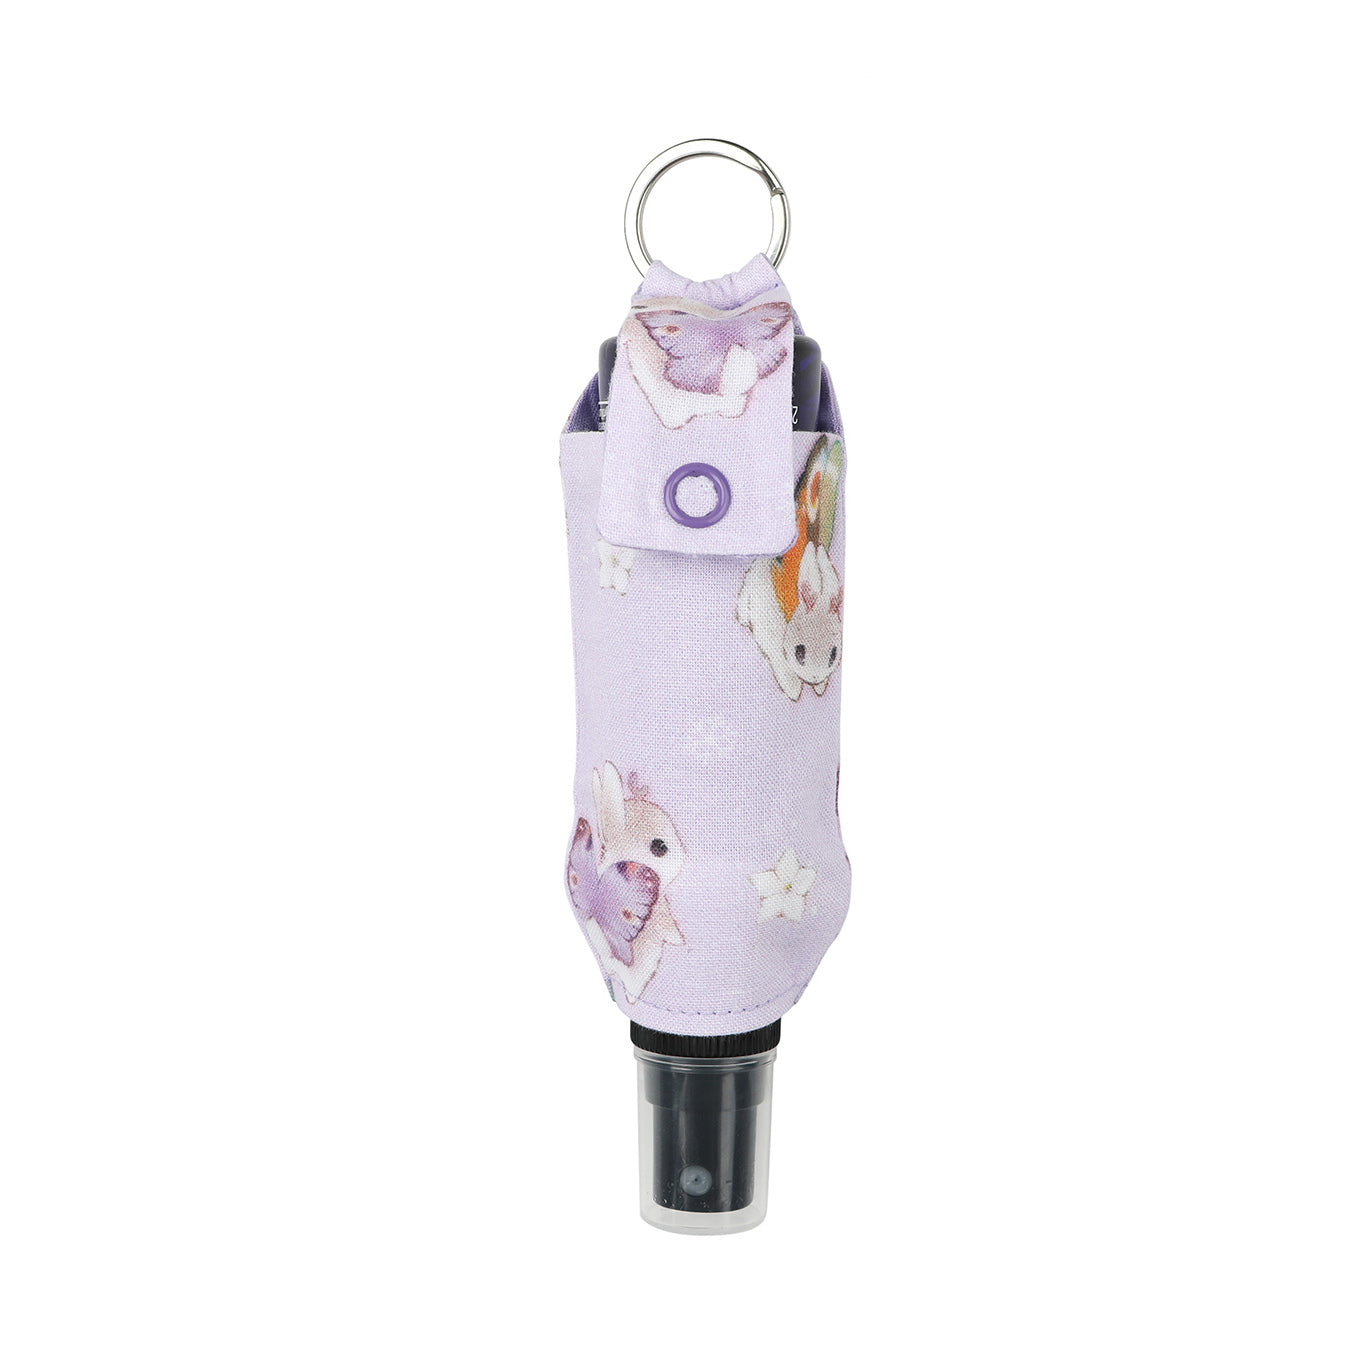 Purple bunnerfly hand sanitizer holder with plastic hand sanitizer spray bottle inside on white background.